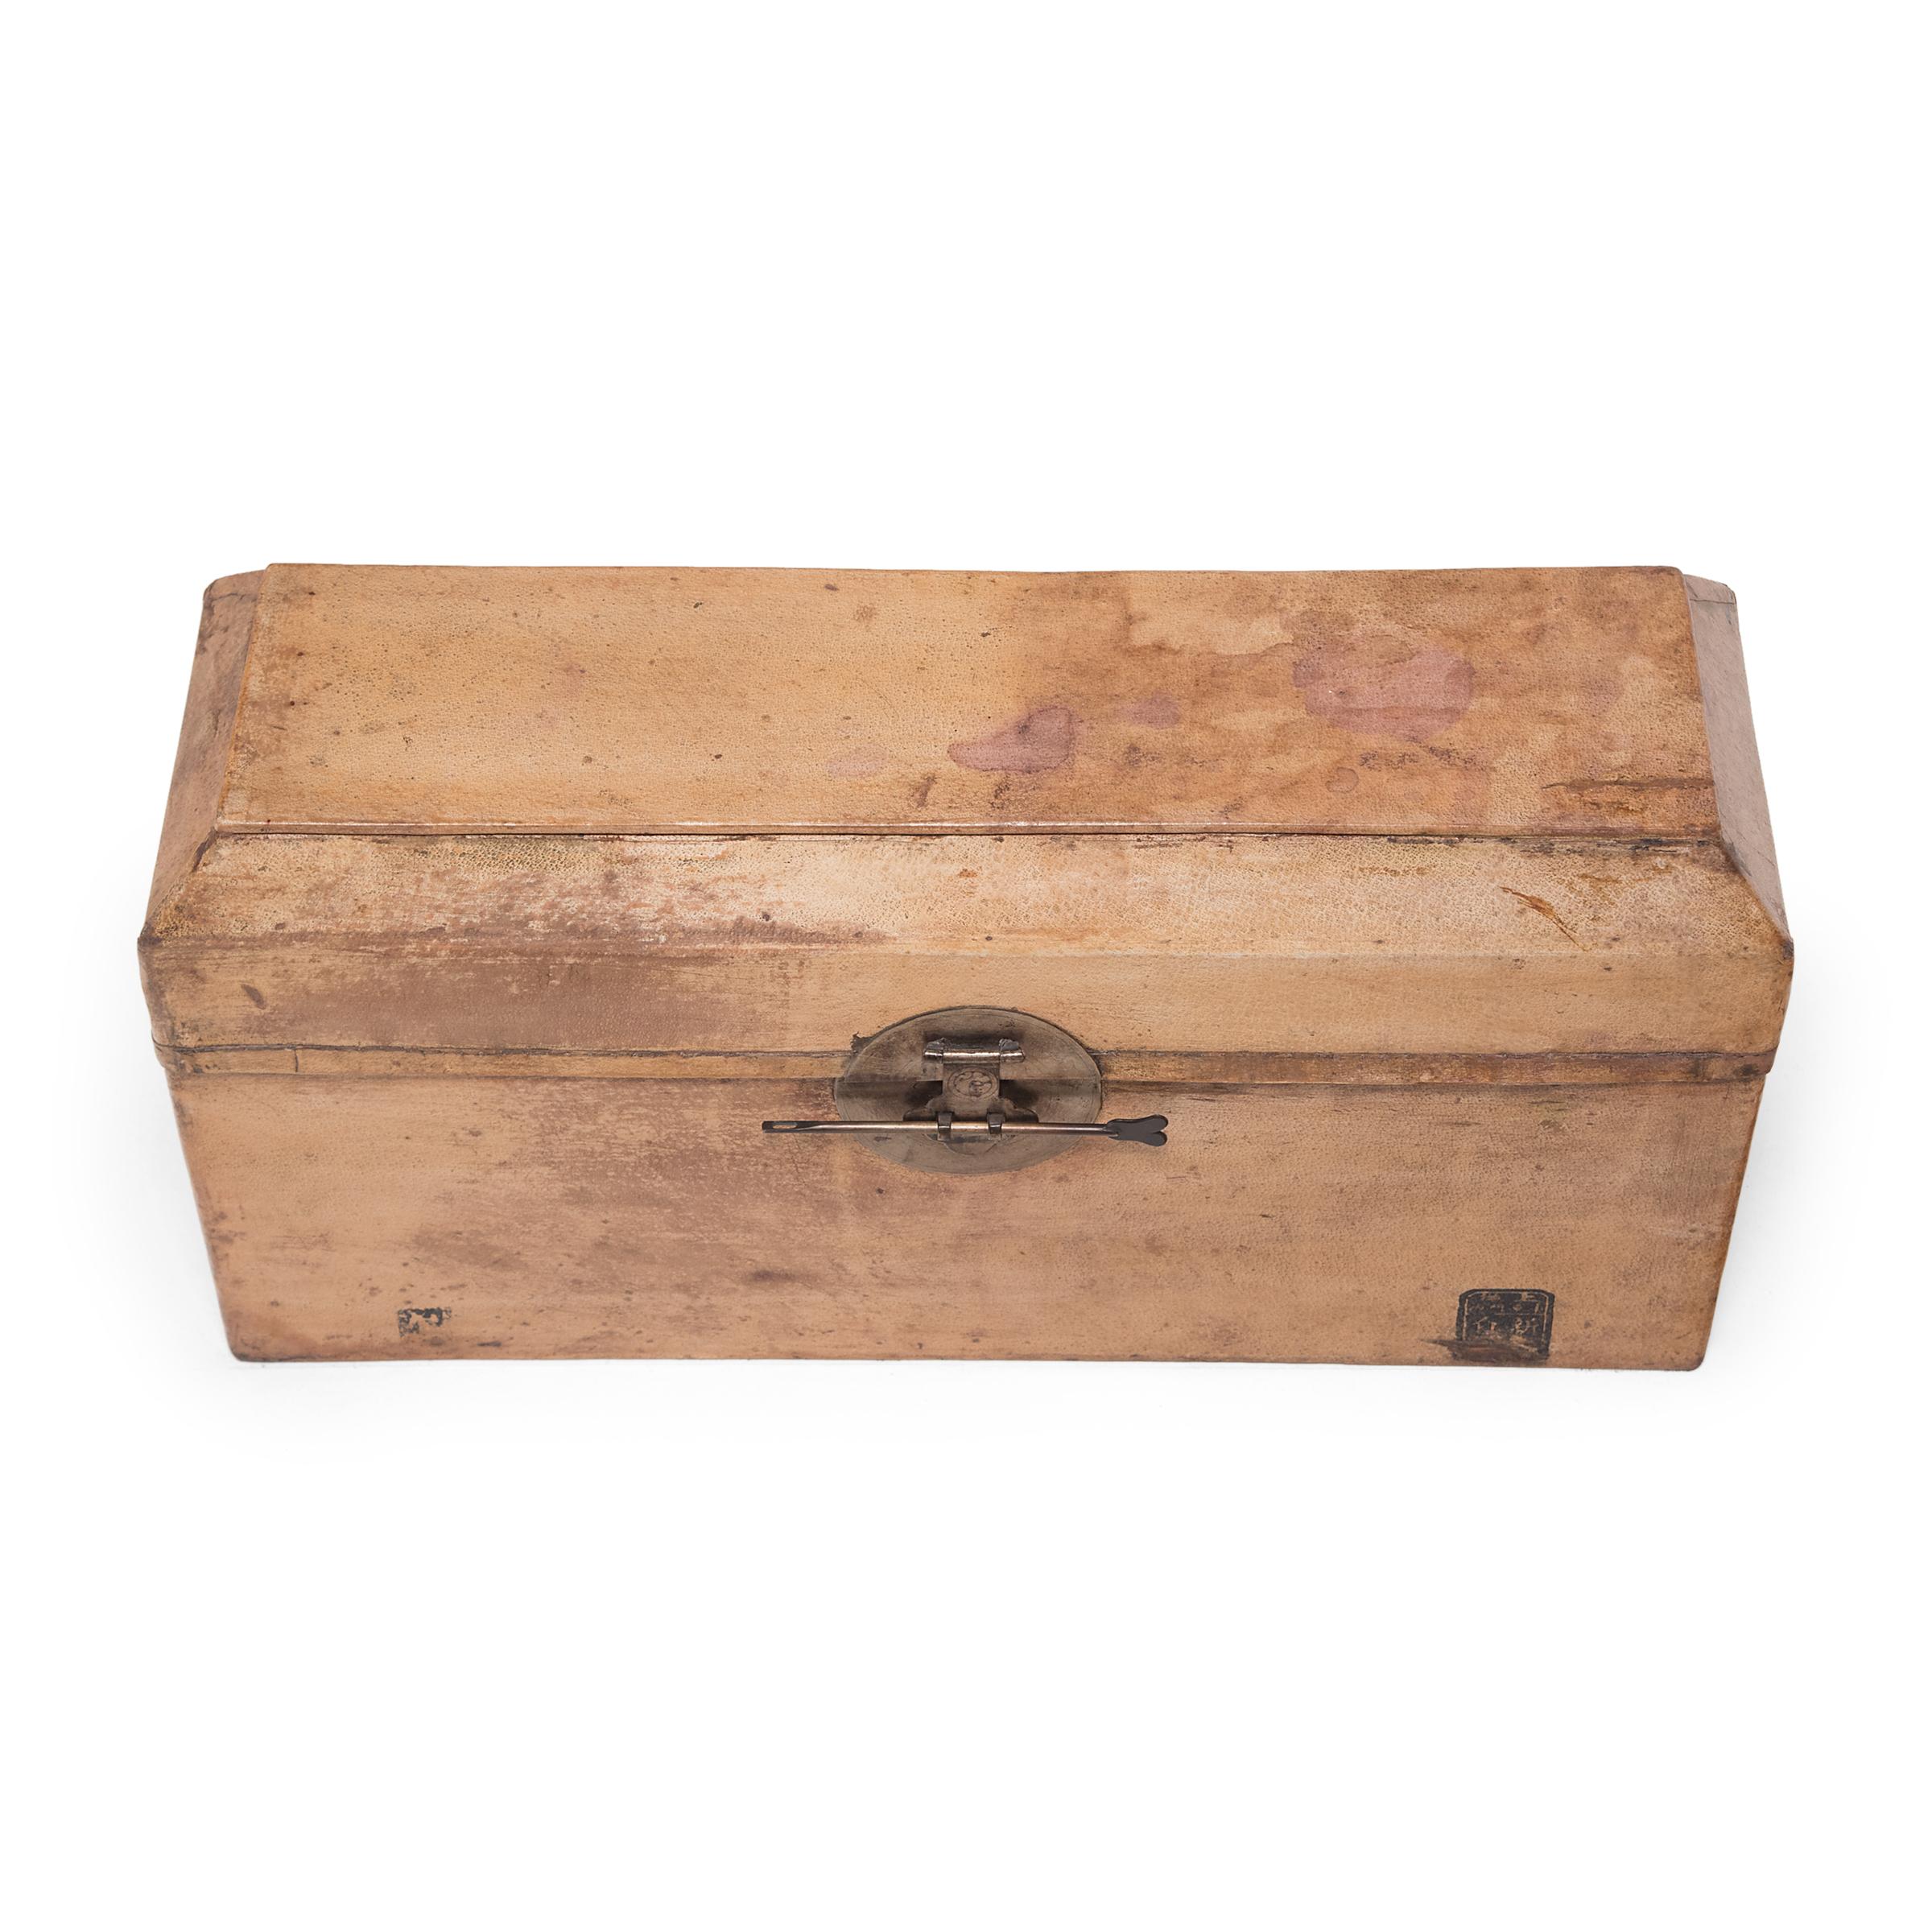 Minimalist Chinese Hide Document Box, c. 1850